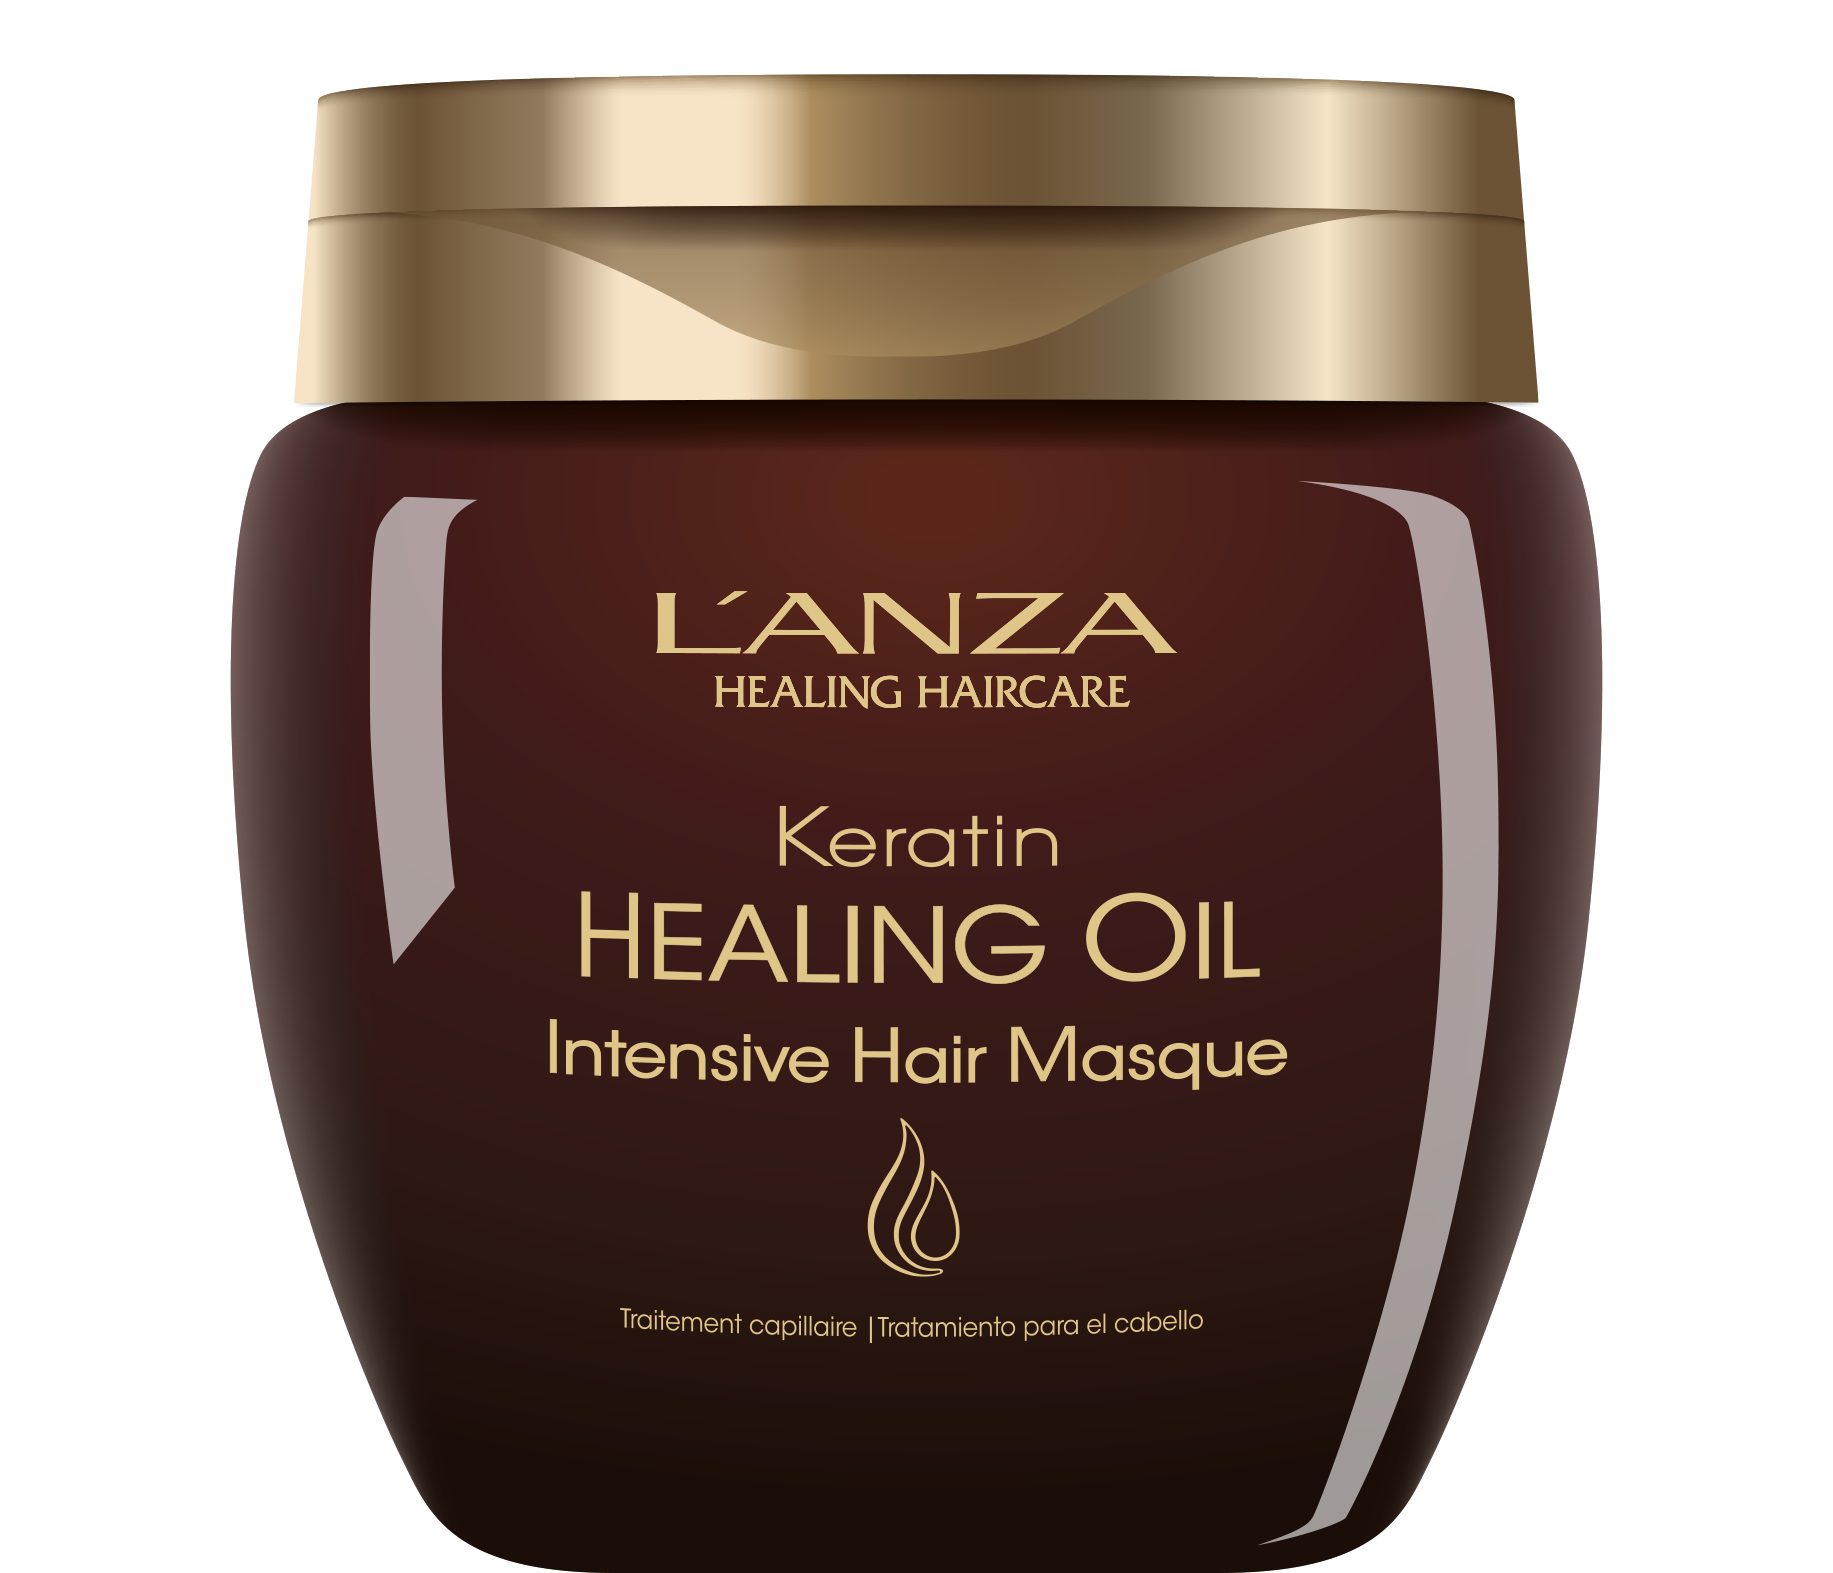 L'ANZA Keratin Healing Oil Masque